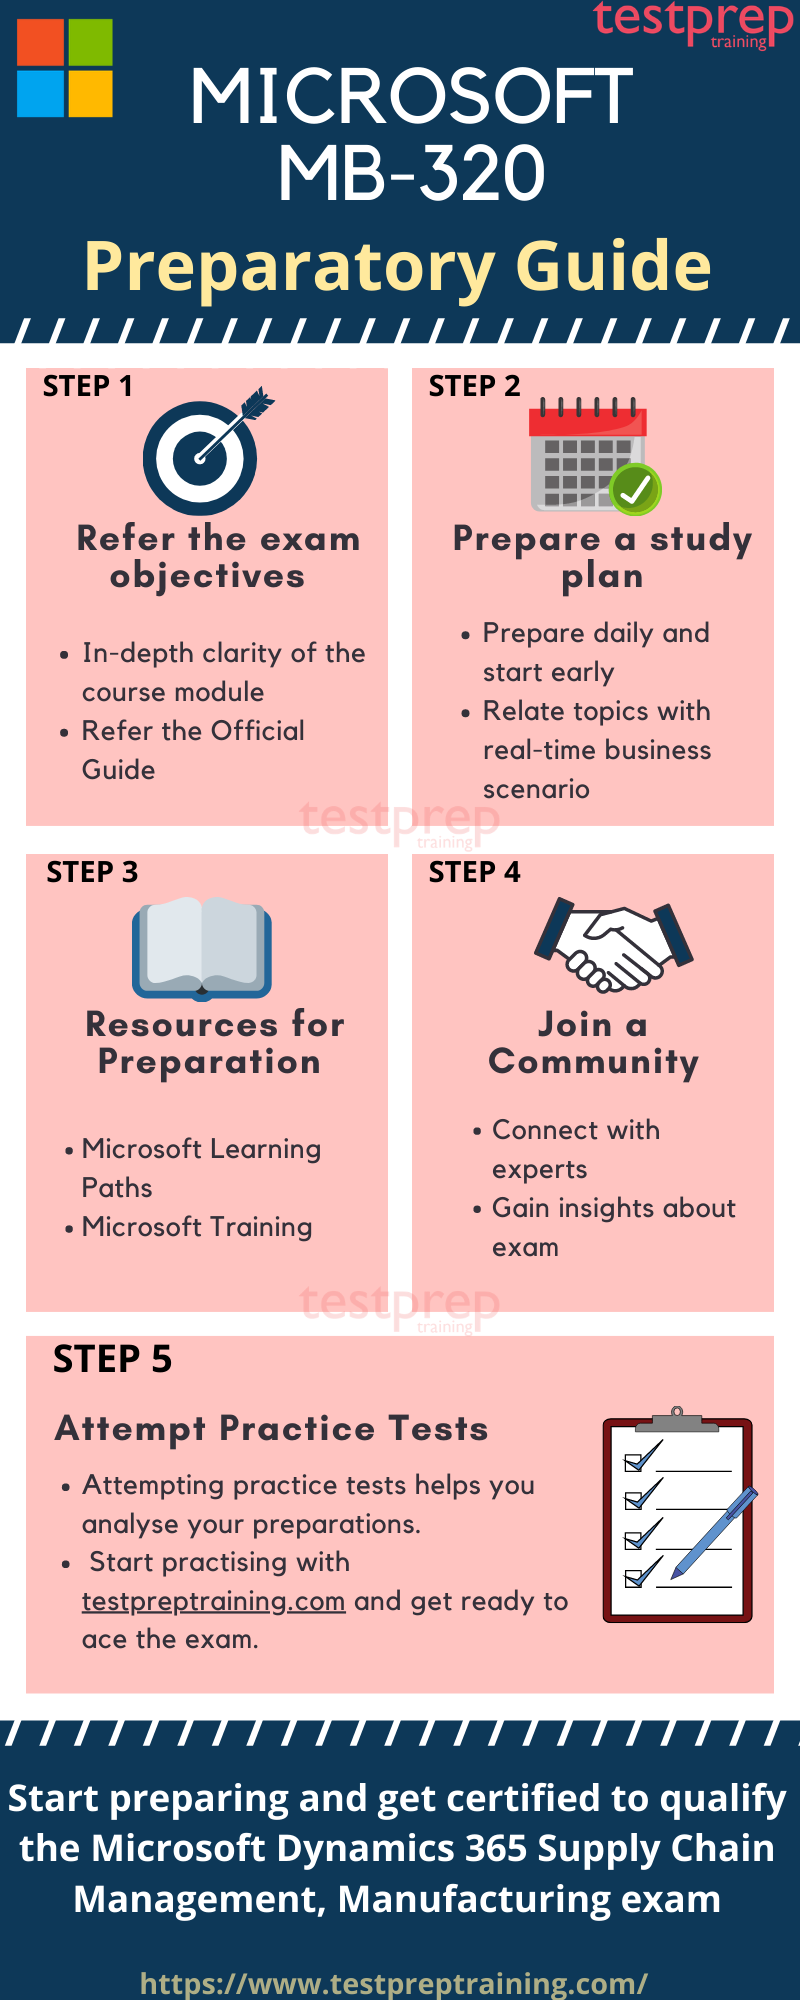 Microsoft Exam Preparation Guide